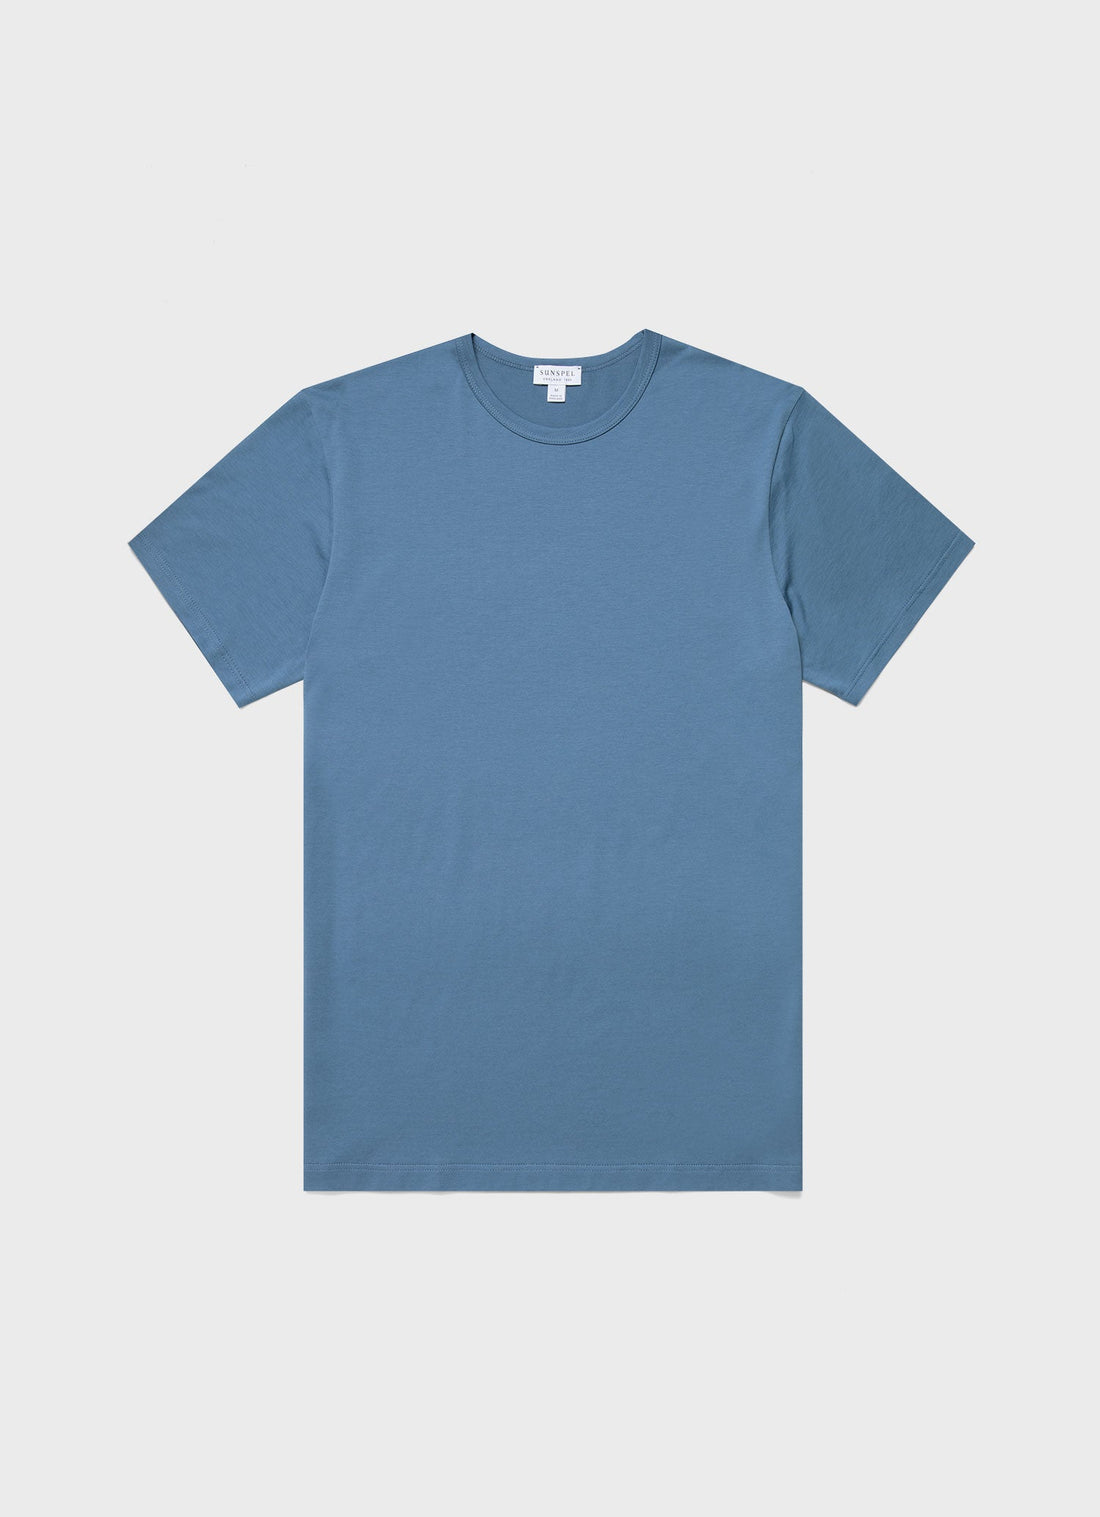 Men's Classic T-shirt in Bluestone